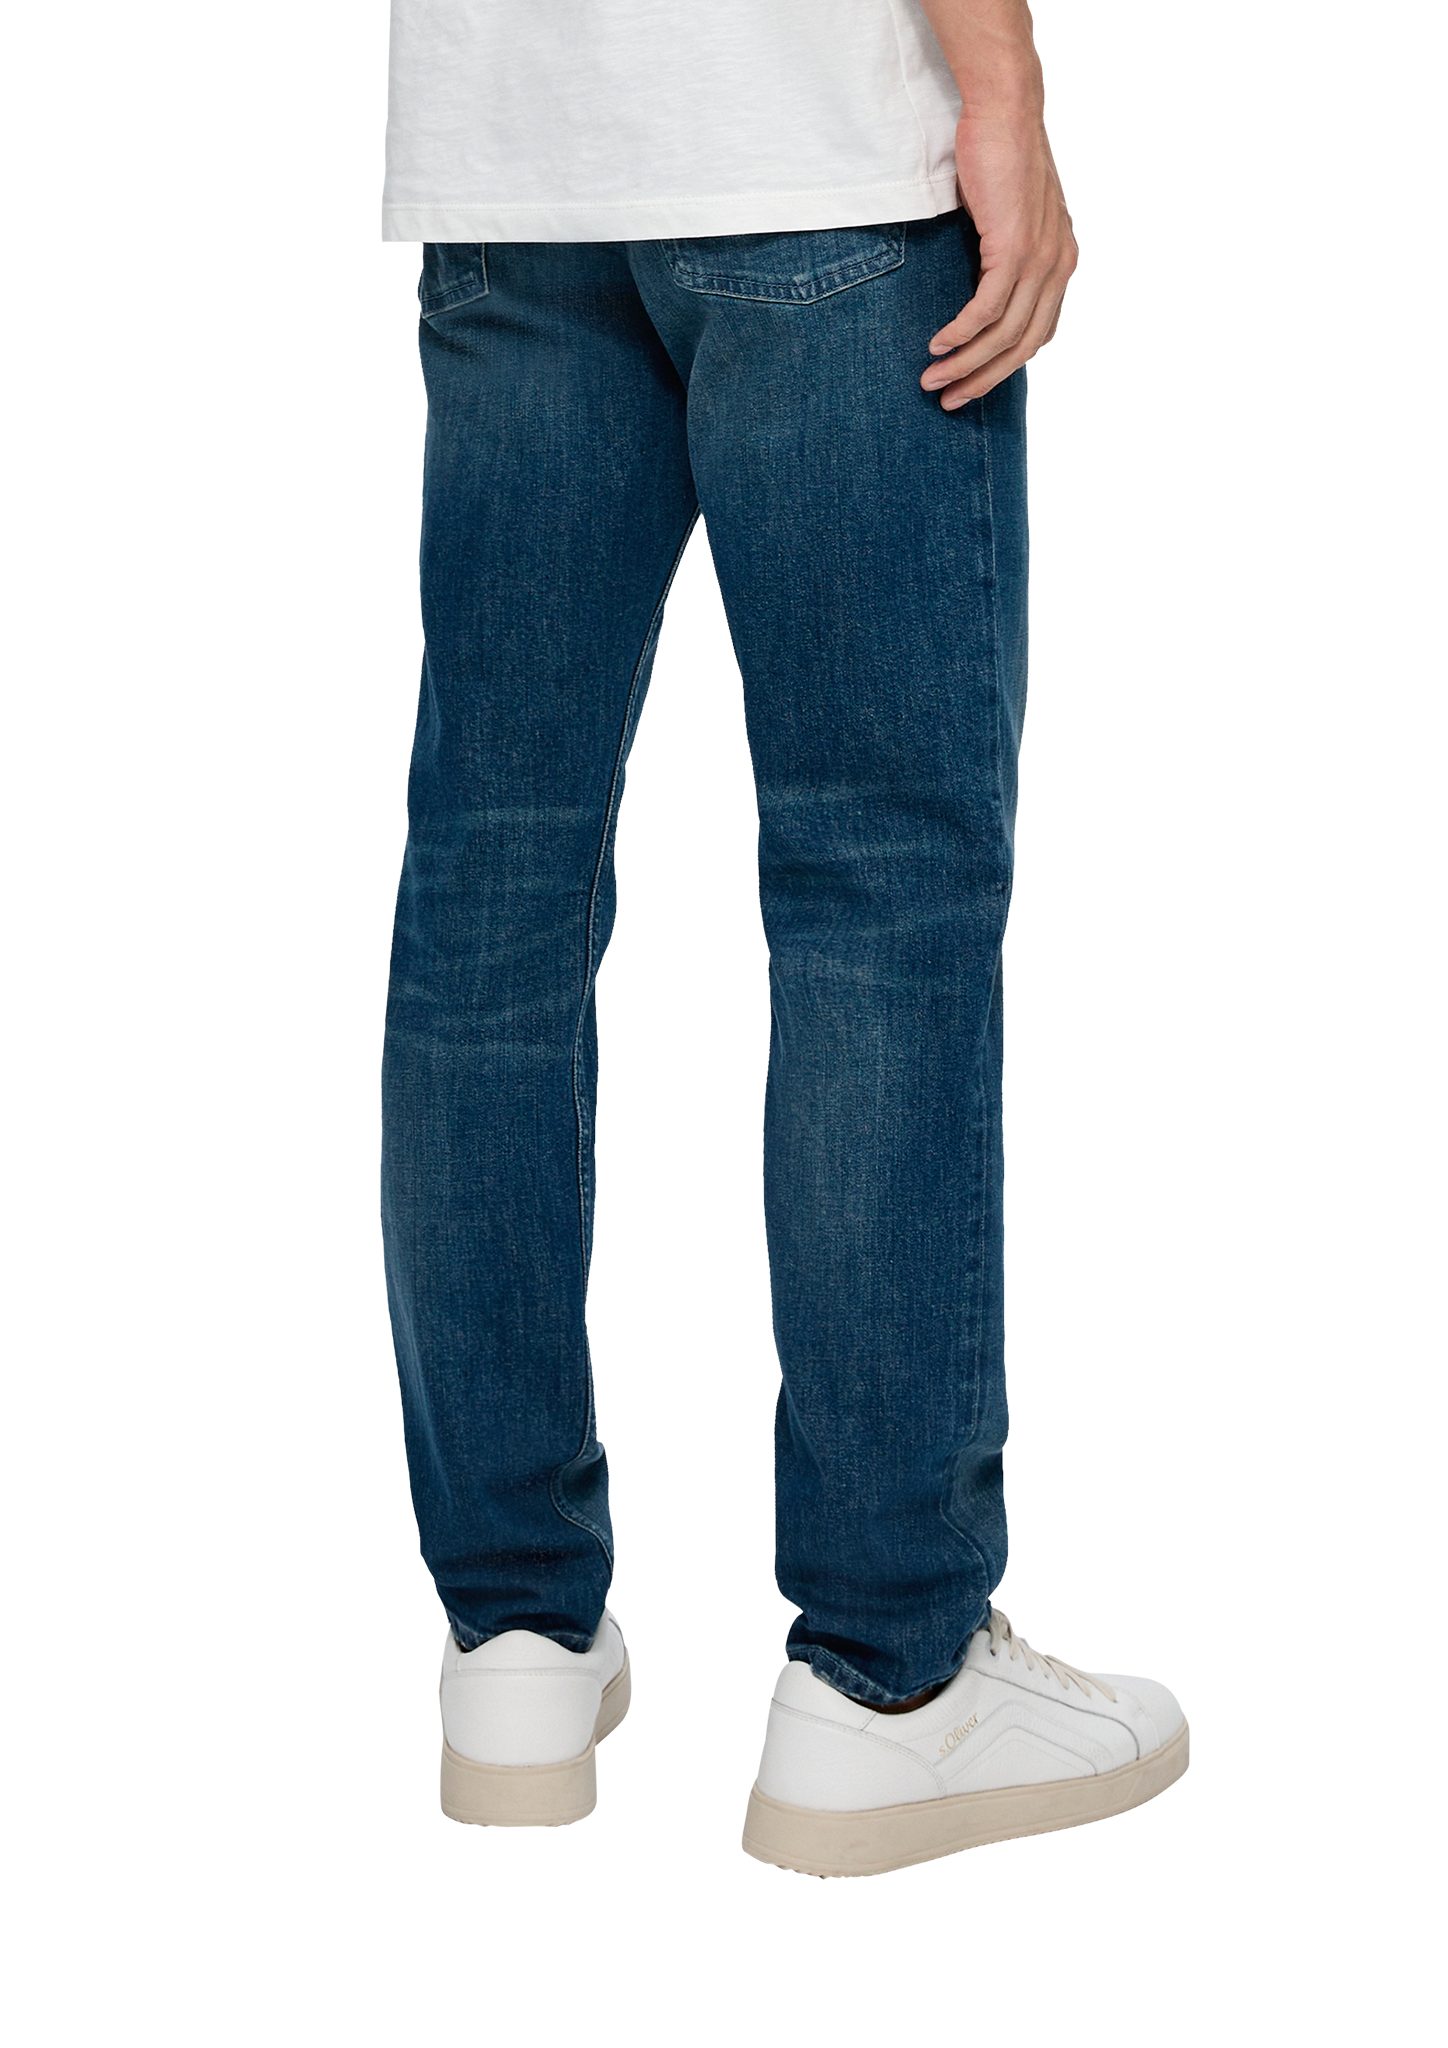 s.Oliver Stoffhose Jeans Nelio / Label-Patch Baumwollstretch dunkelblau Mid Leg Fit / Rise / / Slim Slim